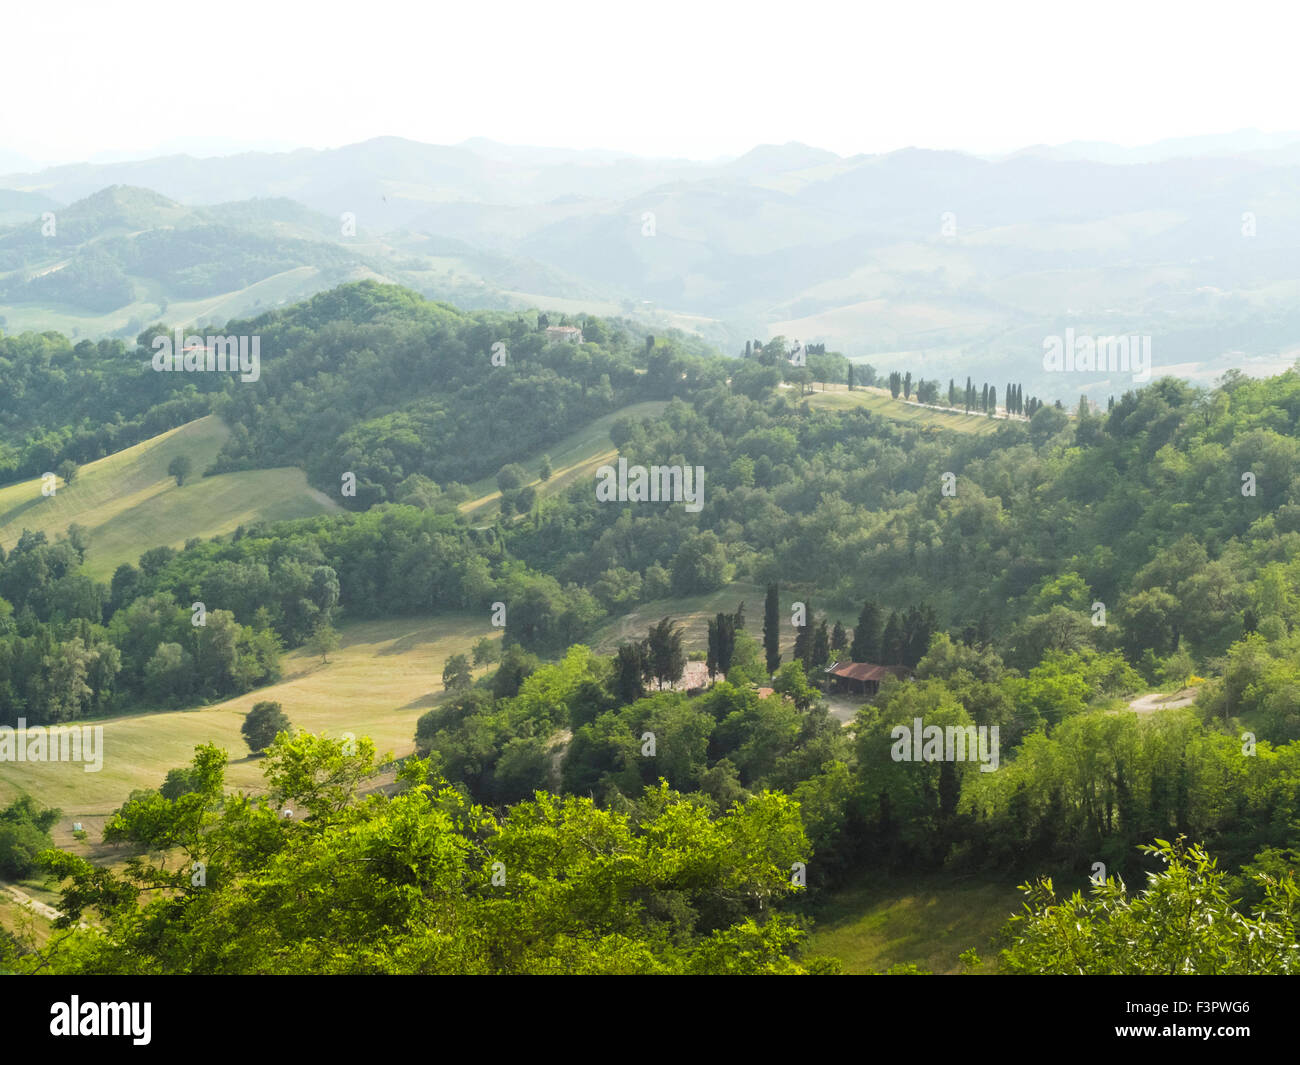 Italy, Emilia-Romagna, Urbino - view from the town. Stock Photo